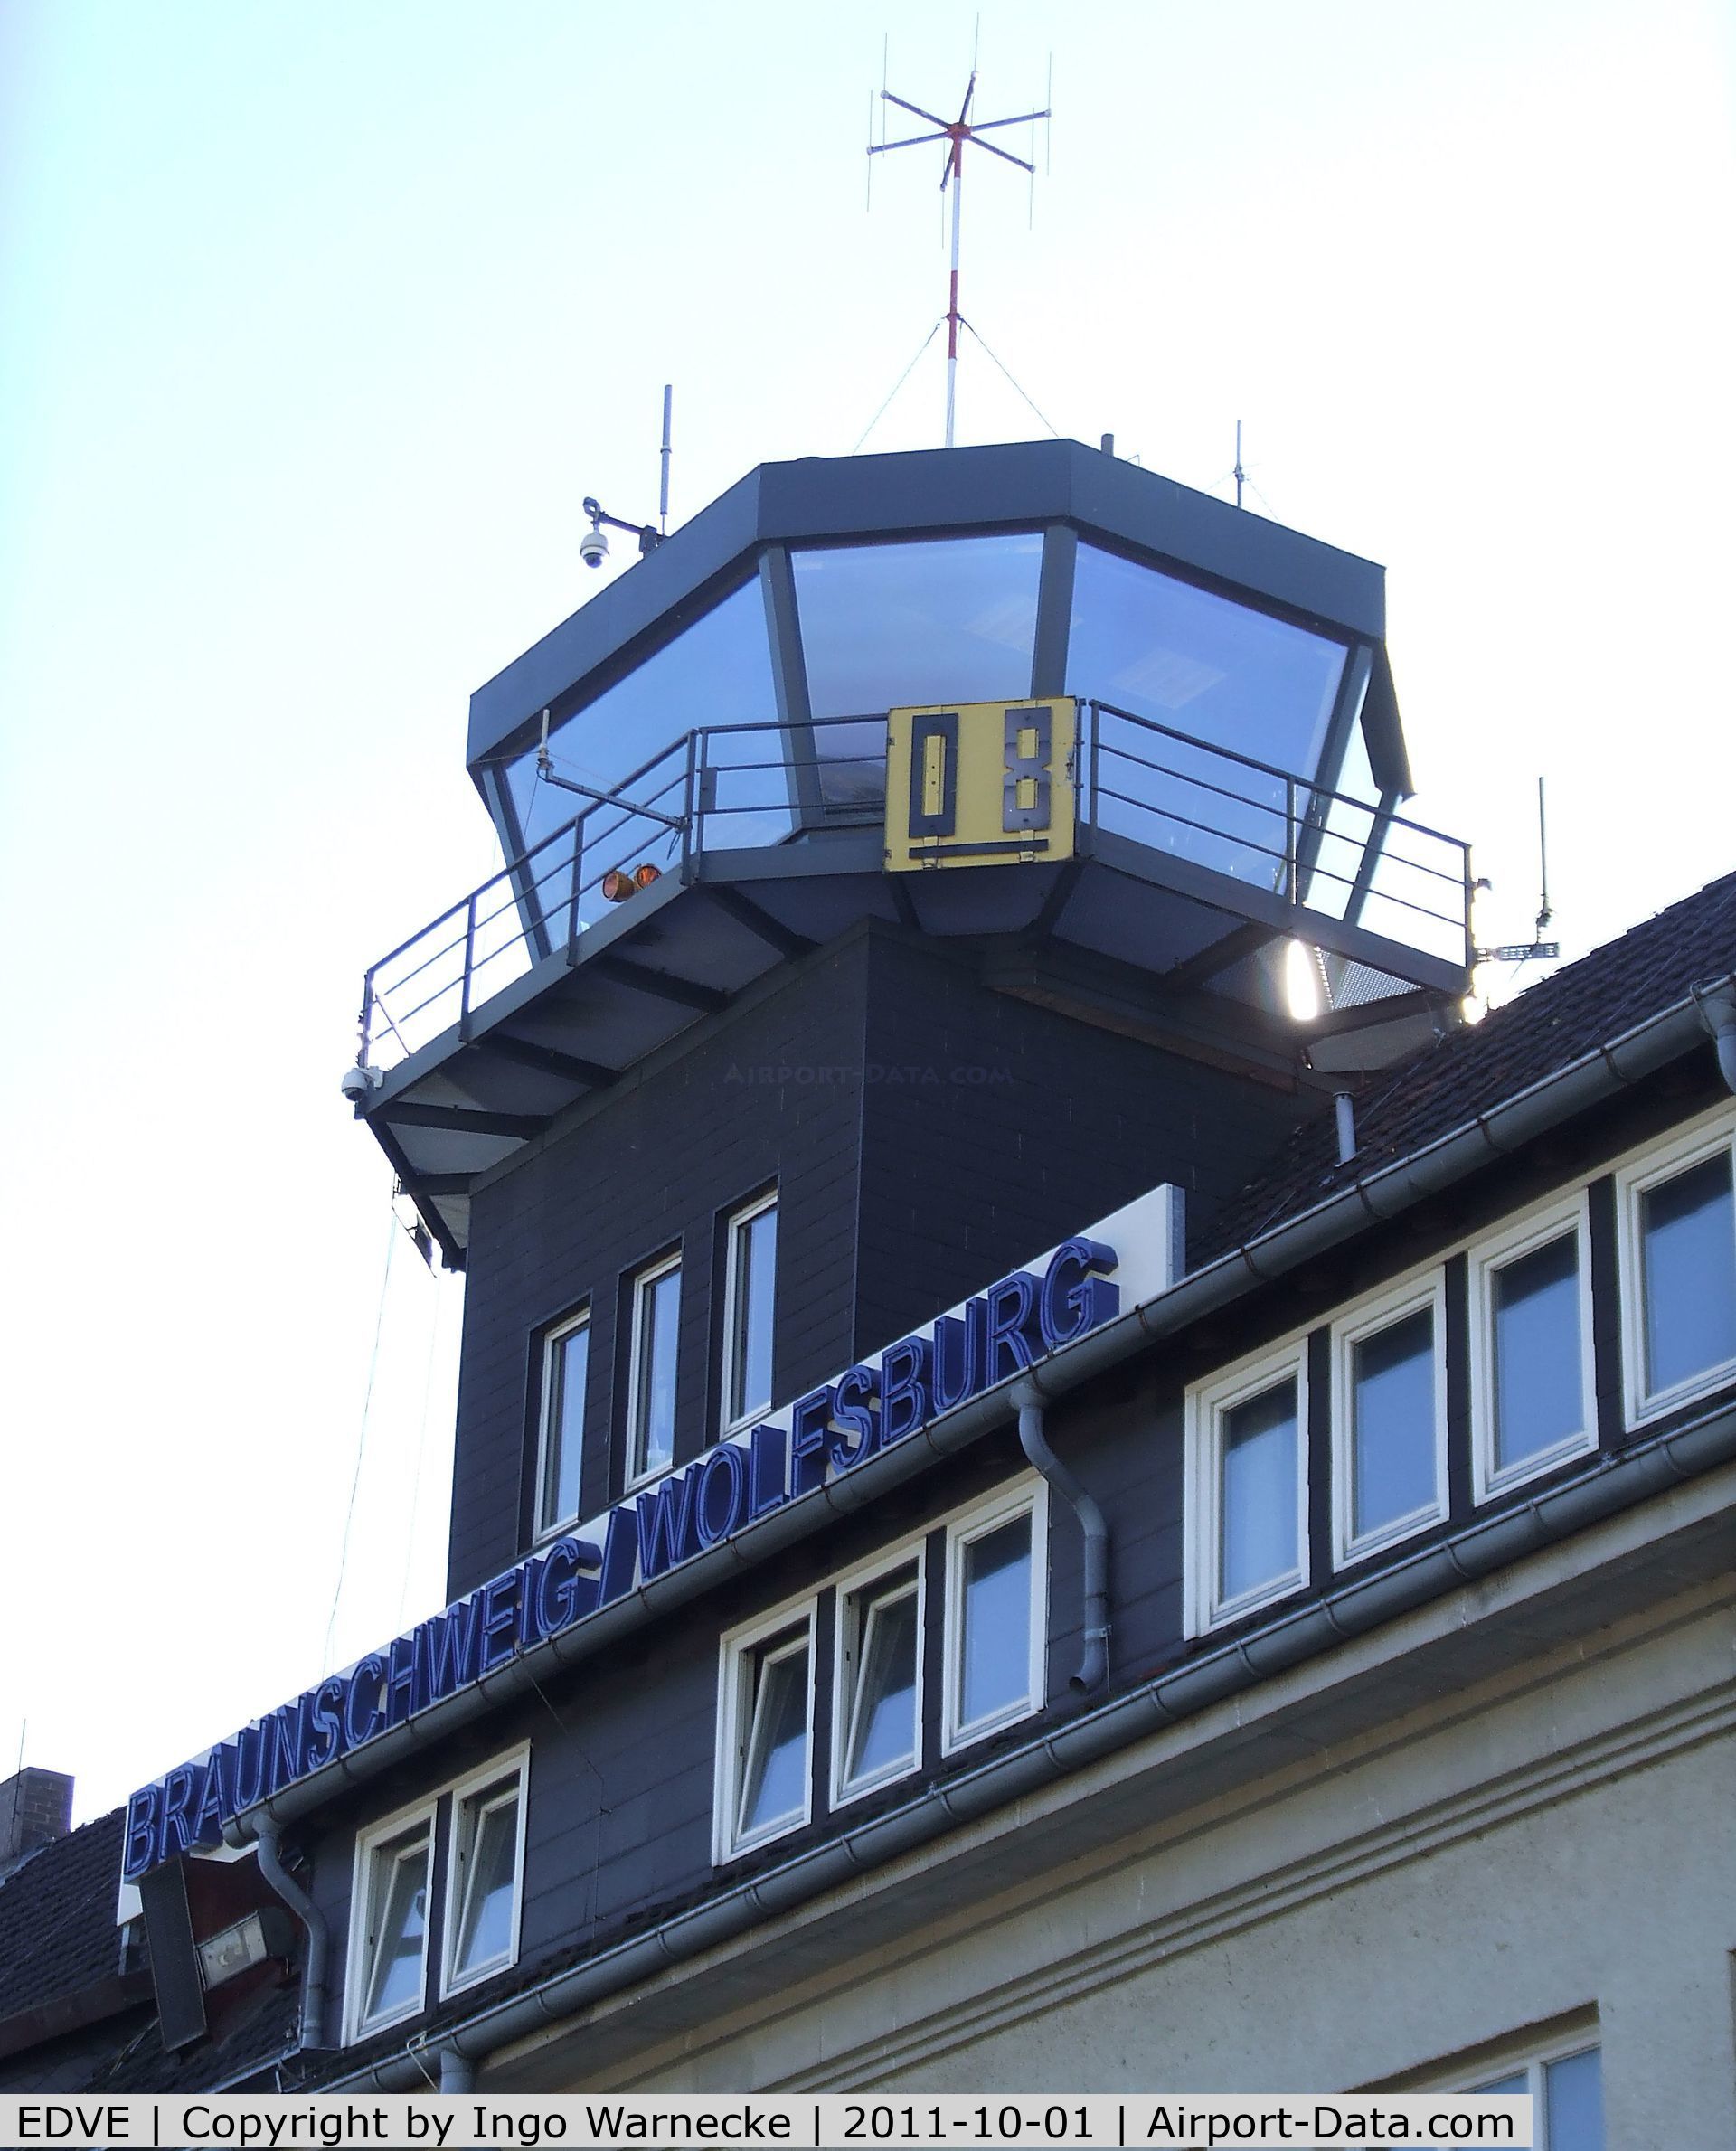 Braunschweig-Wolfsburg Regional Airport, Braunschweig, Lower Saxony Germany (EDVE) - tower on top of the main terminal building at Braunschweig-Waggum airport